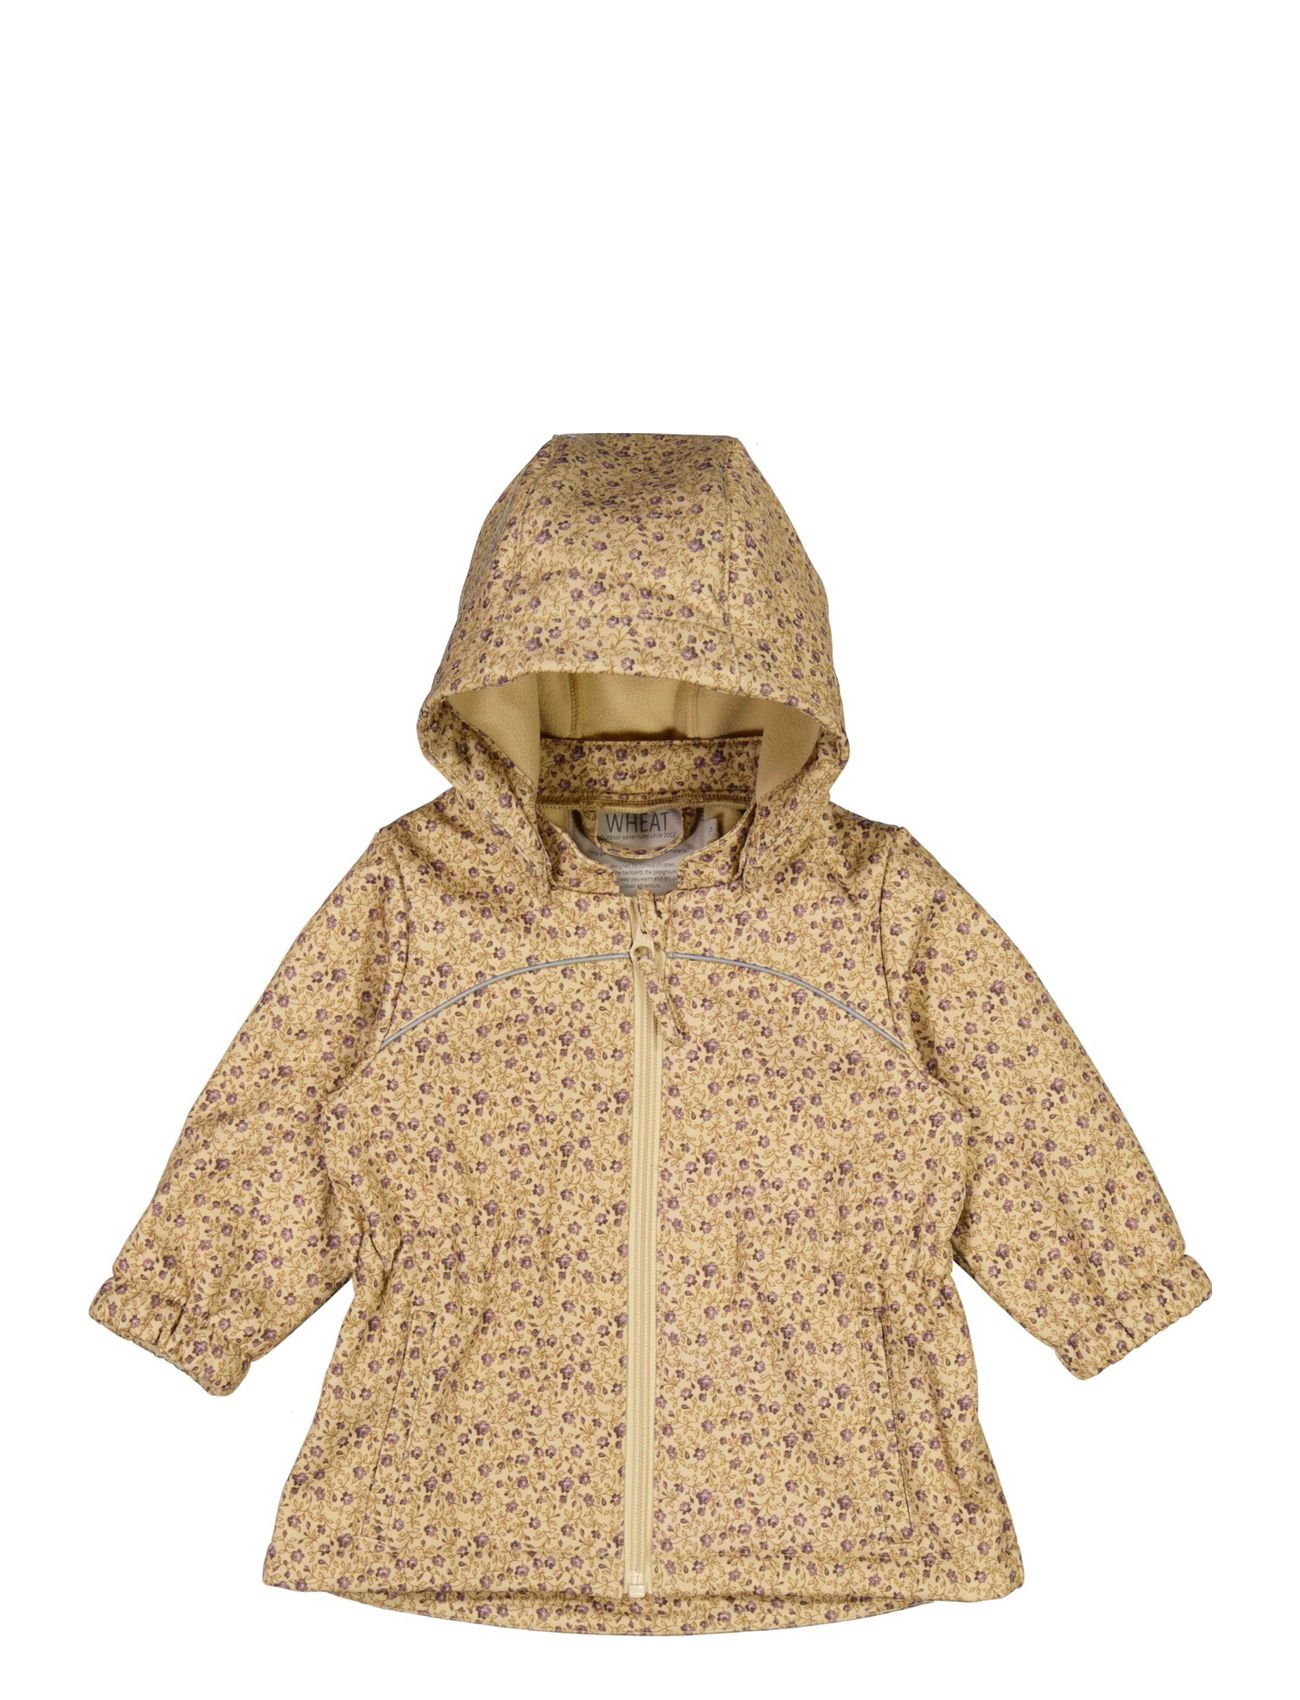 Wheat Softshell Jacket Elois (Lilac Flowers/Multi/patterned) 84.95 € | Boozt.com